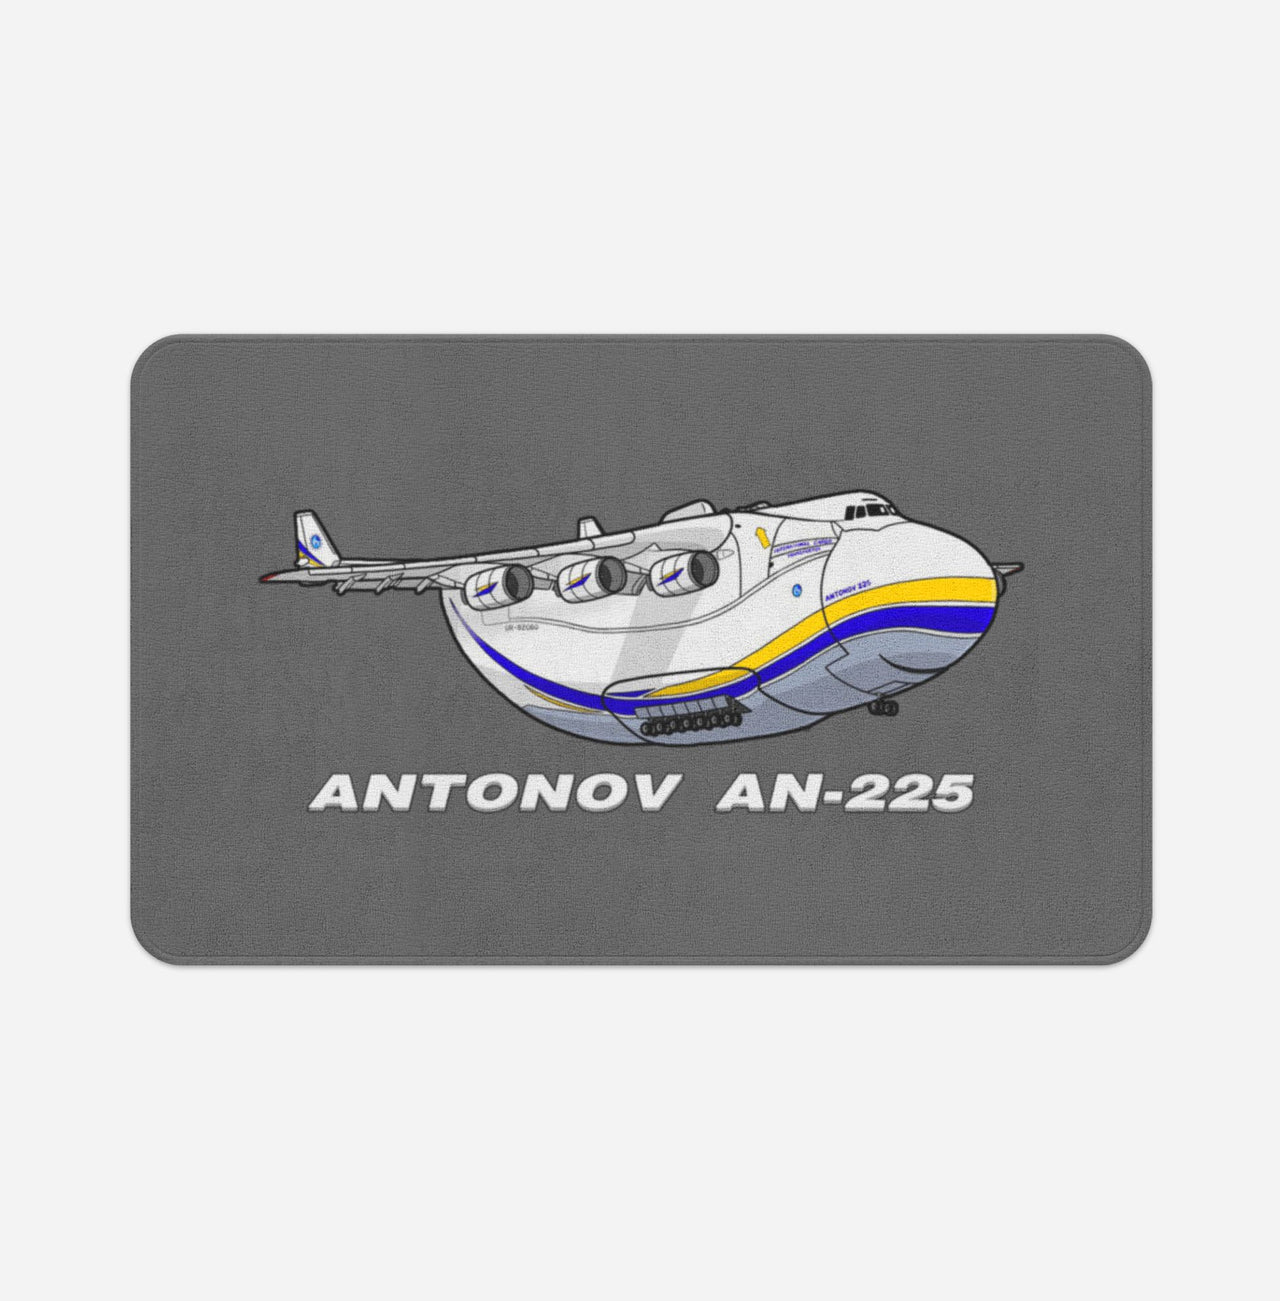 Antonov AN-225 (17) Designed Bath Mats